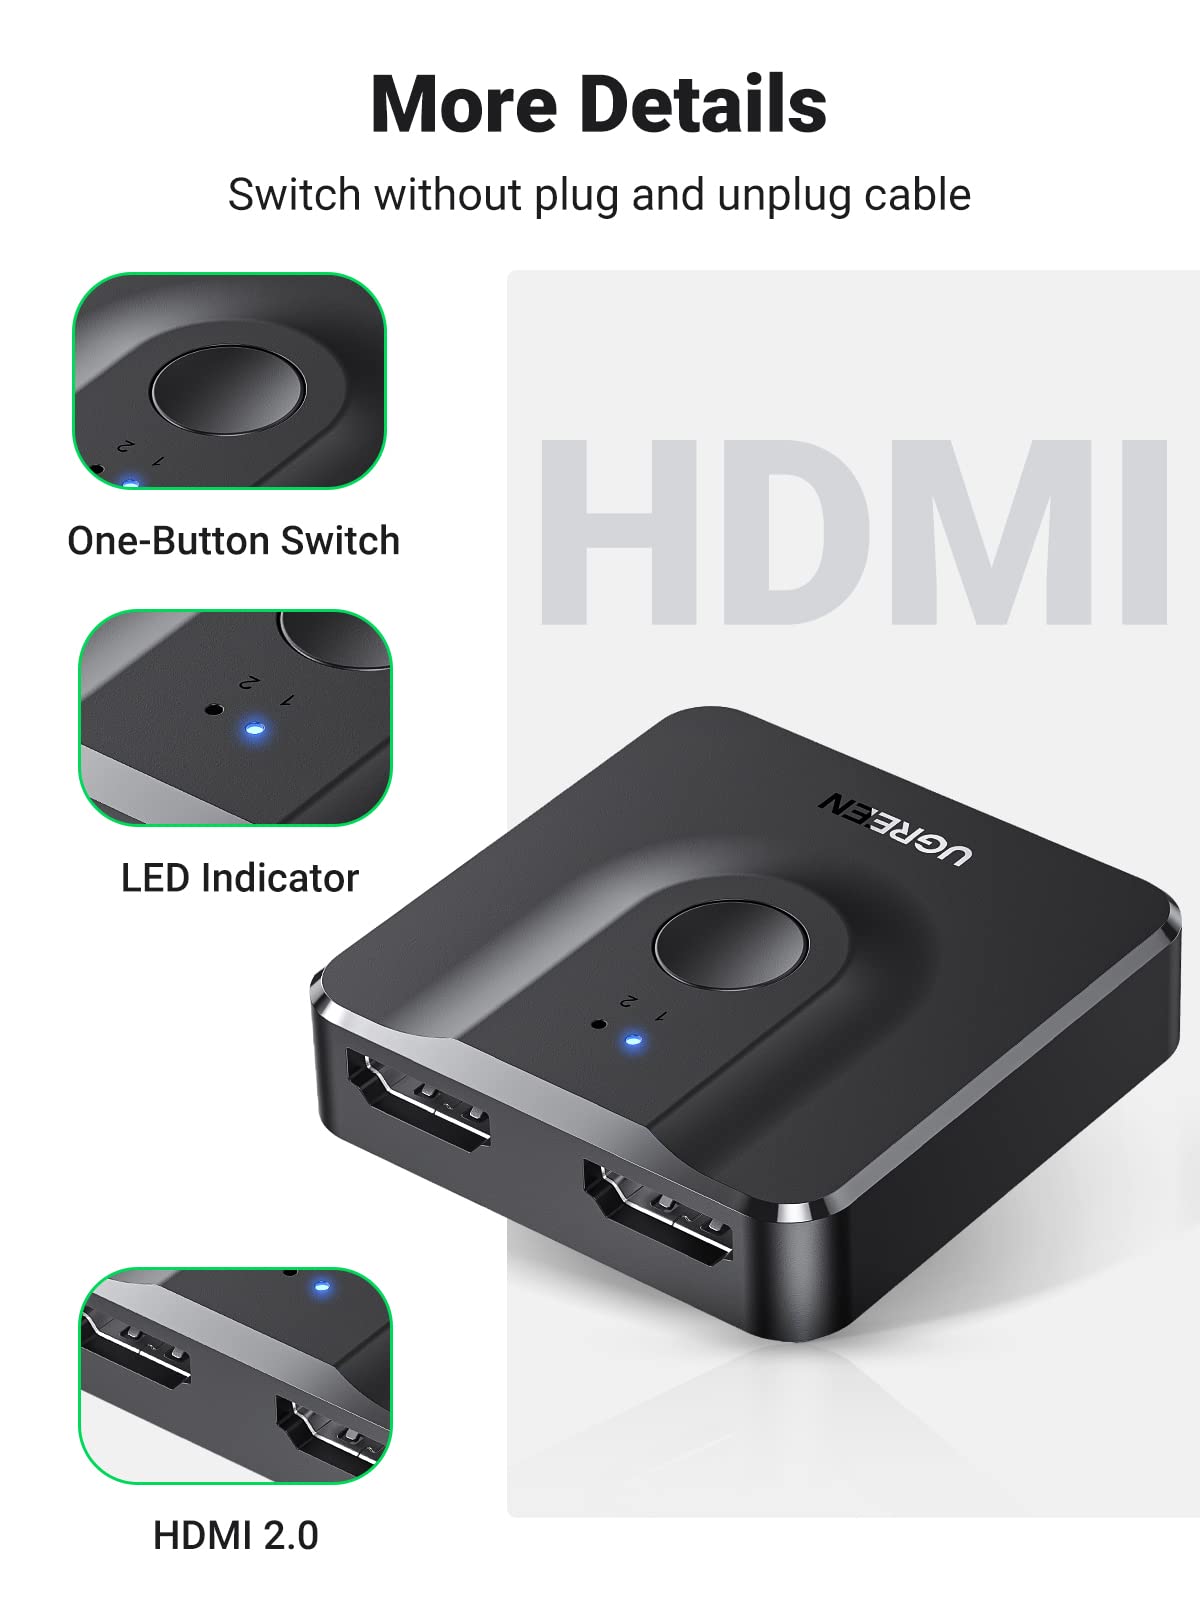 Ugreen Bi-Directional HDMI Switcher